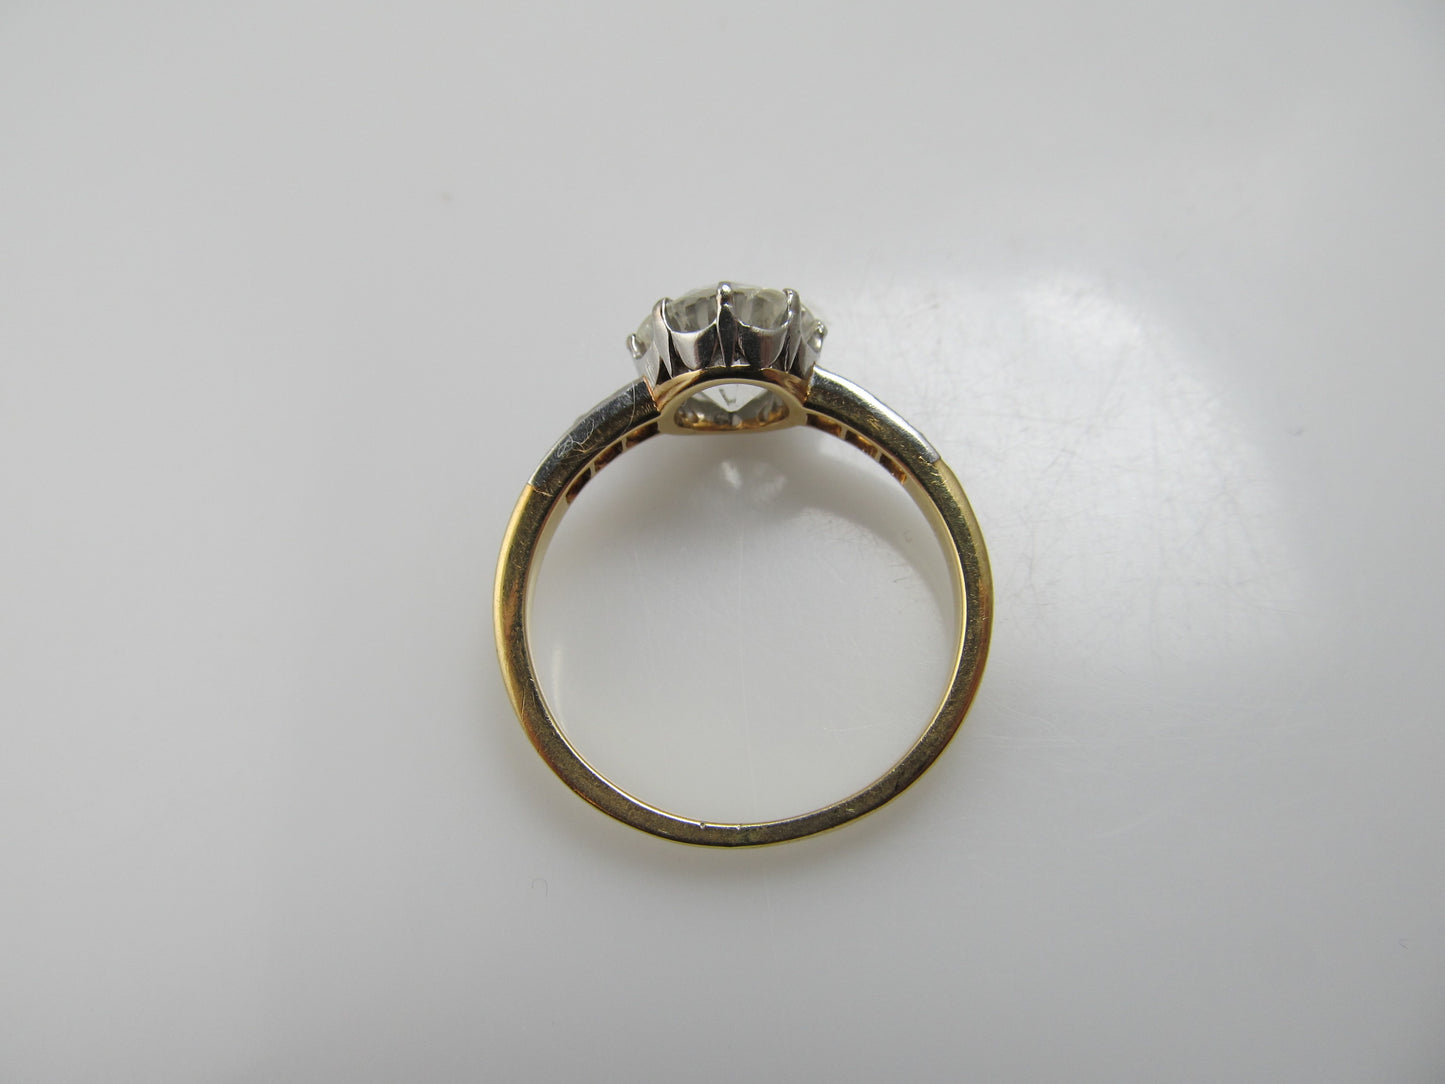 Antique 1.94ct old cut diamond engagement ring